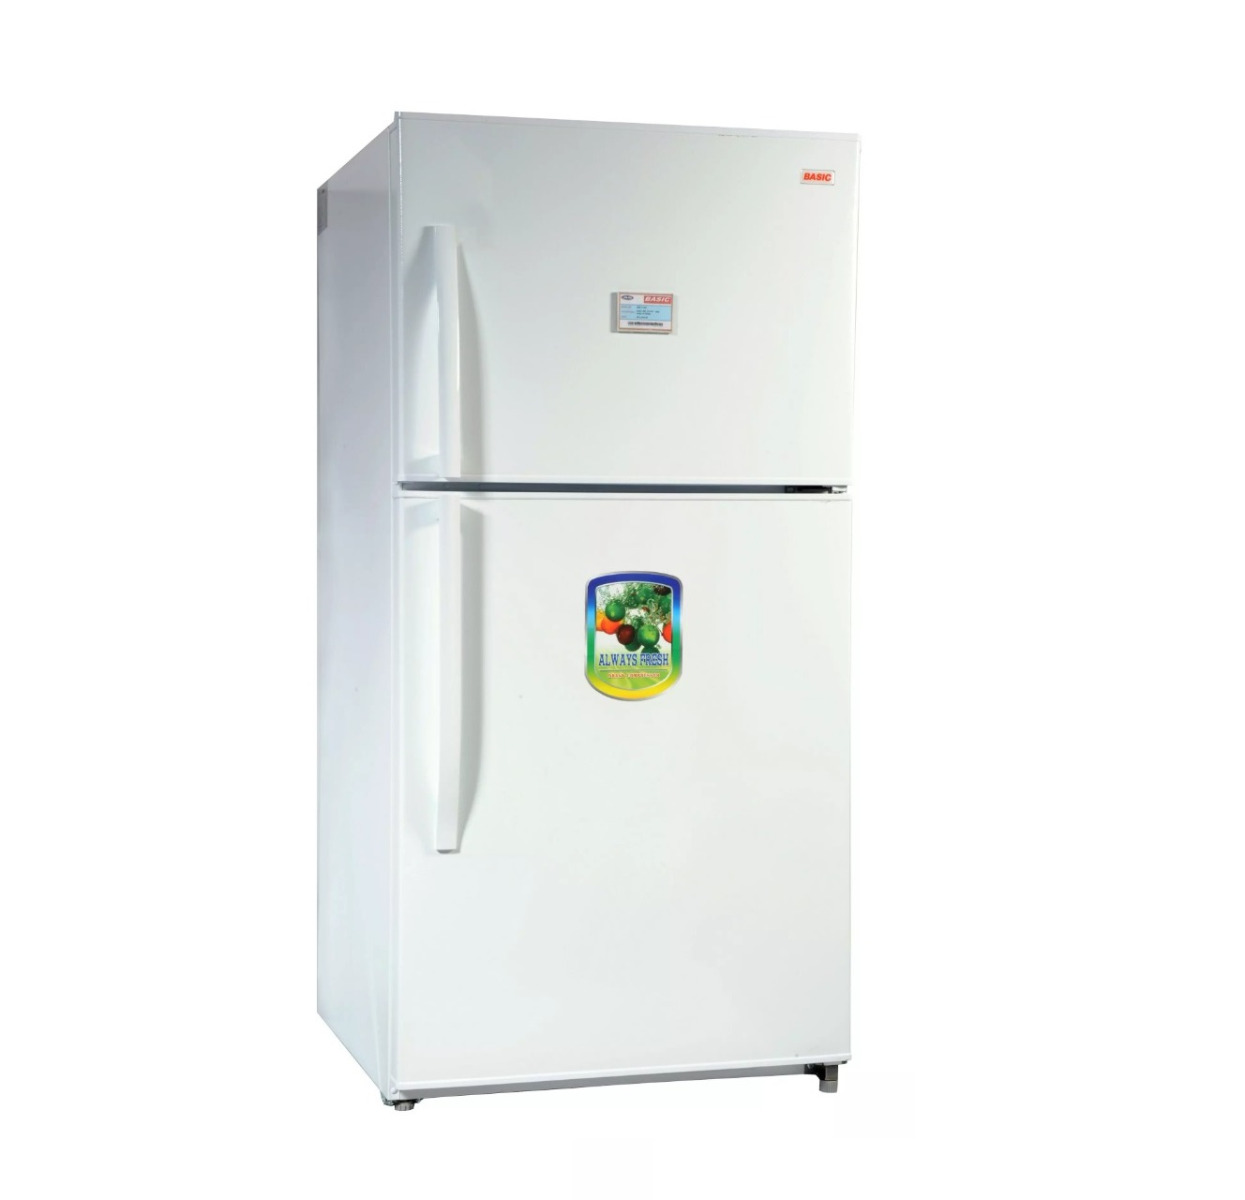 BASIC Nofrost Refrigerator 21 CU.FT, 594 Ltr, White - BRD-774W